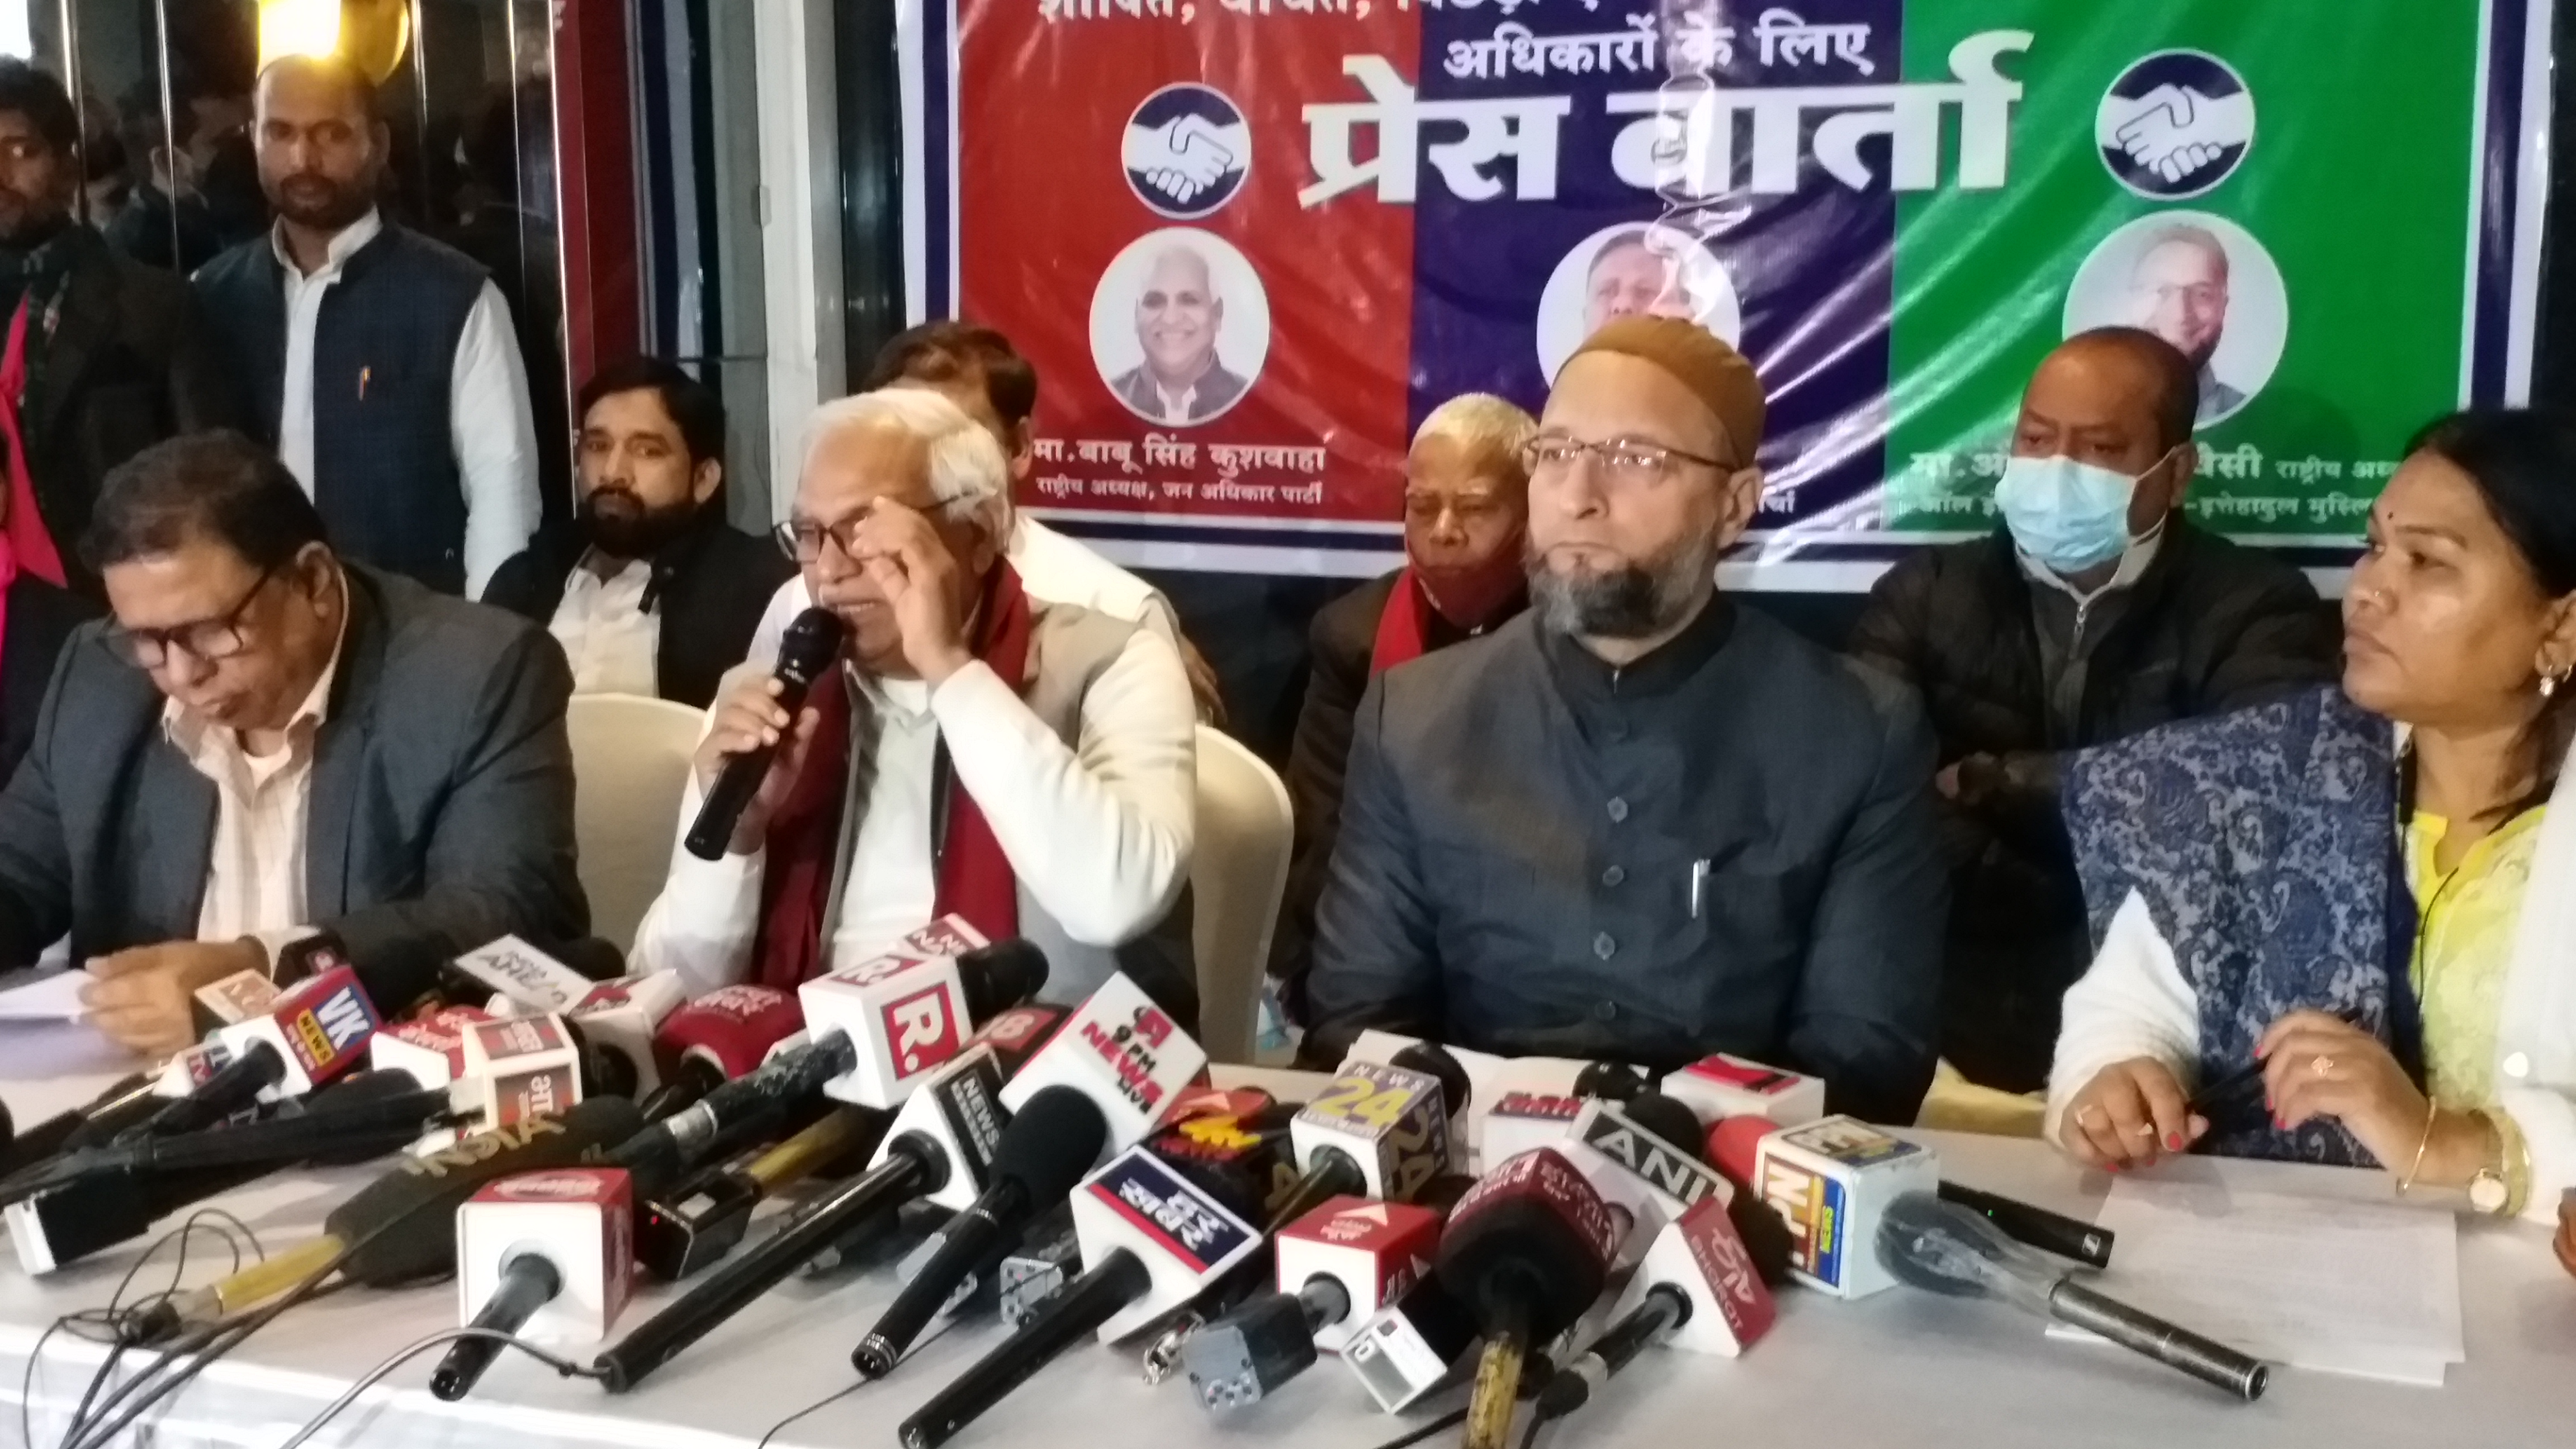 MIM's alliance with five parties in Uttar Pradesh